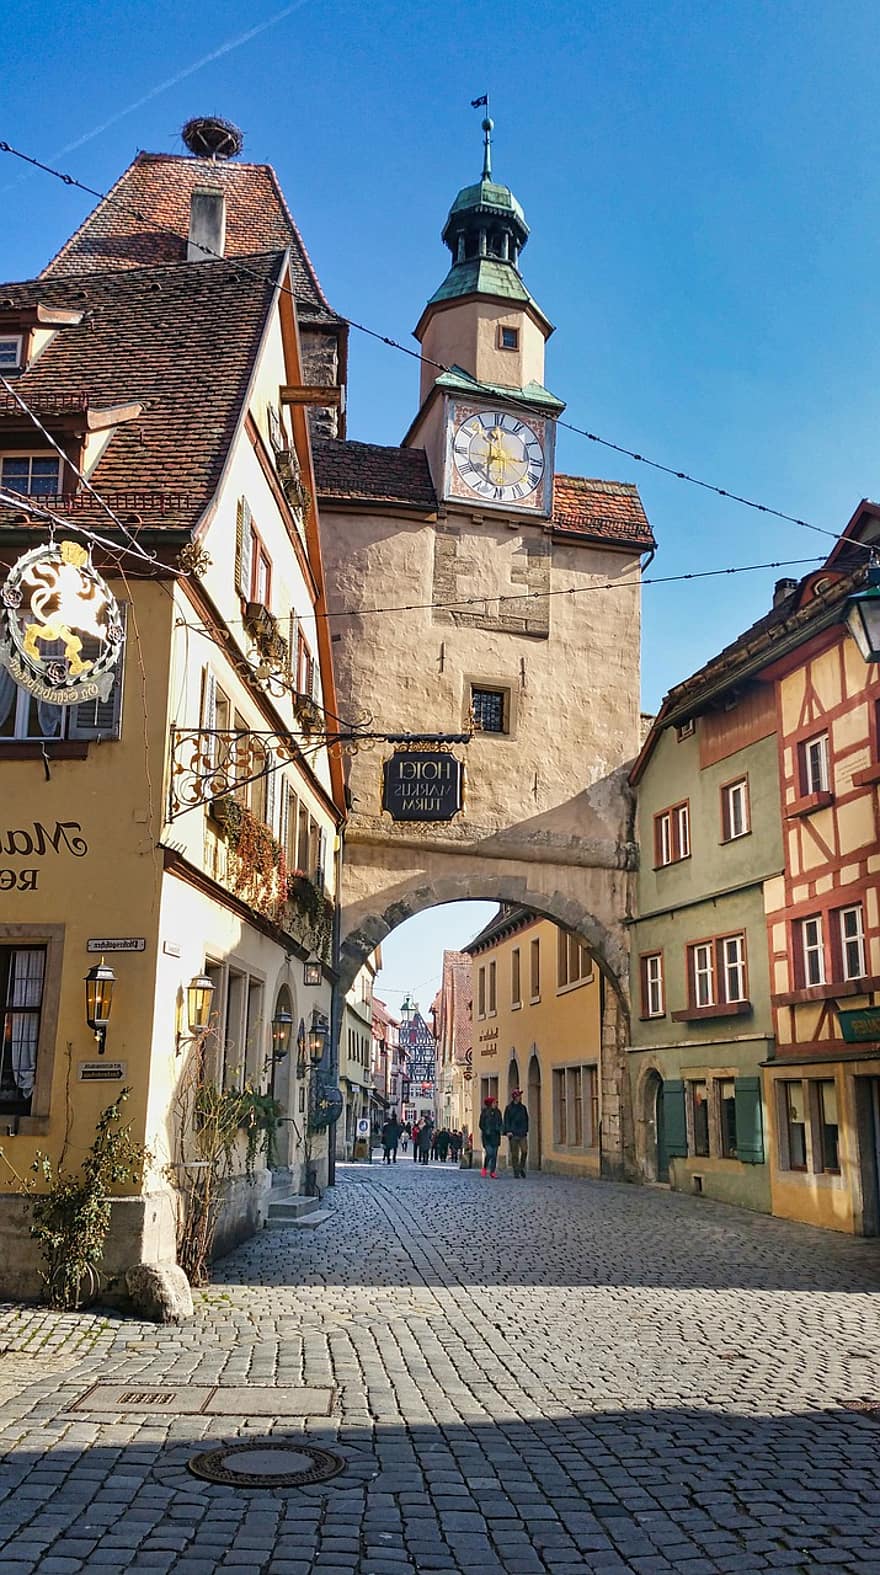 rothenburg ob der tauber, πόρτα της πόλης, δρόμος, κτίρια, εξολοκλήρου σπίτια, αψίδα, παλαιά πόλη, ρολόι, πύργος, αρχιτεκτονική, ιστορικός